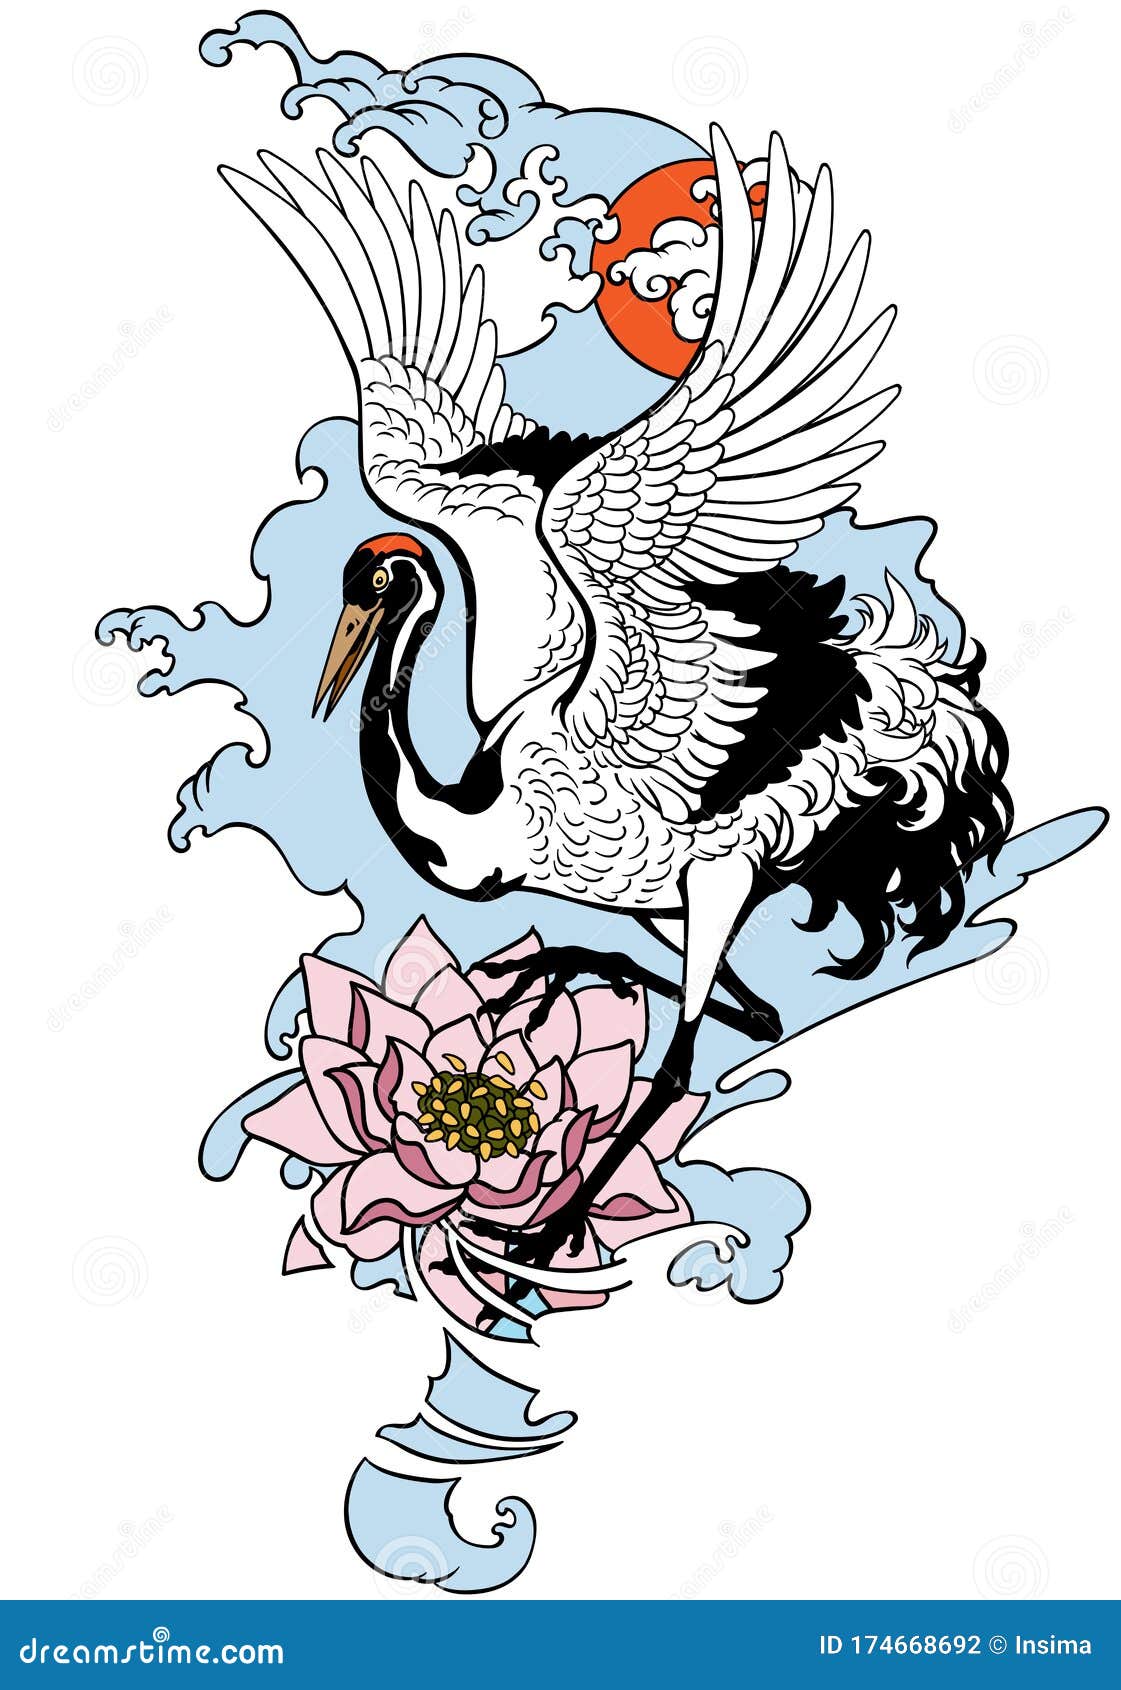 Japanese Sunset Heron TattooLAZY DUO TATTOO SHOP HK 日式蒼鷺雀鳥刺青紋身貼紙香港